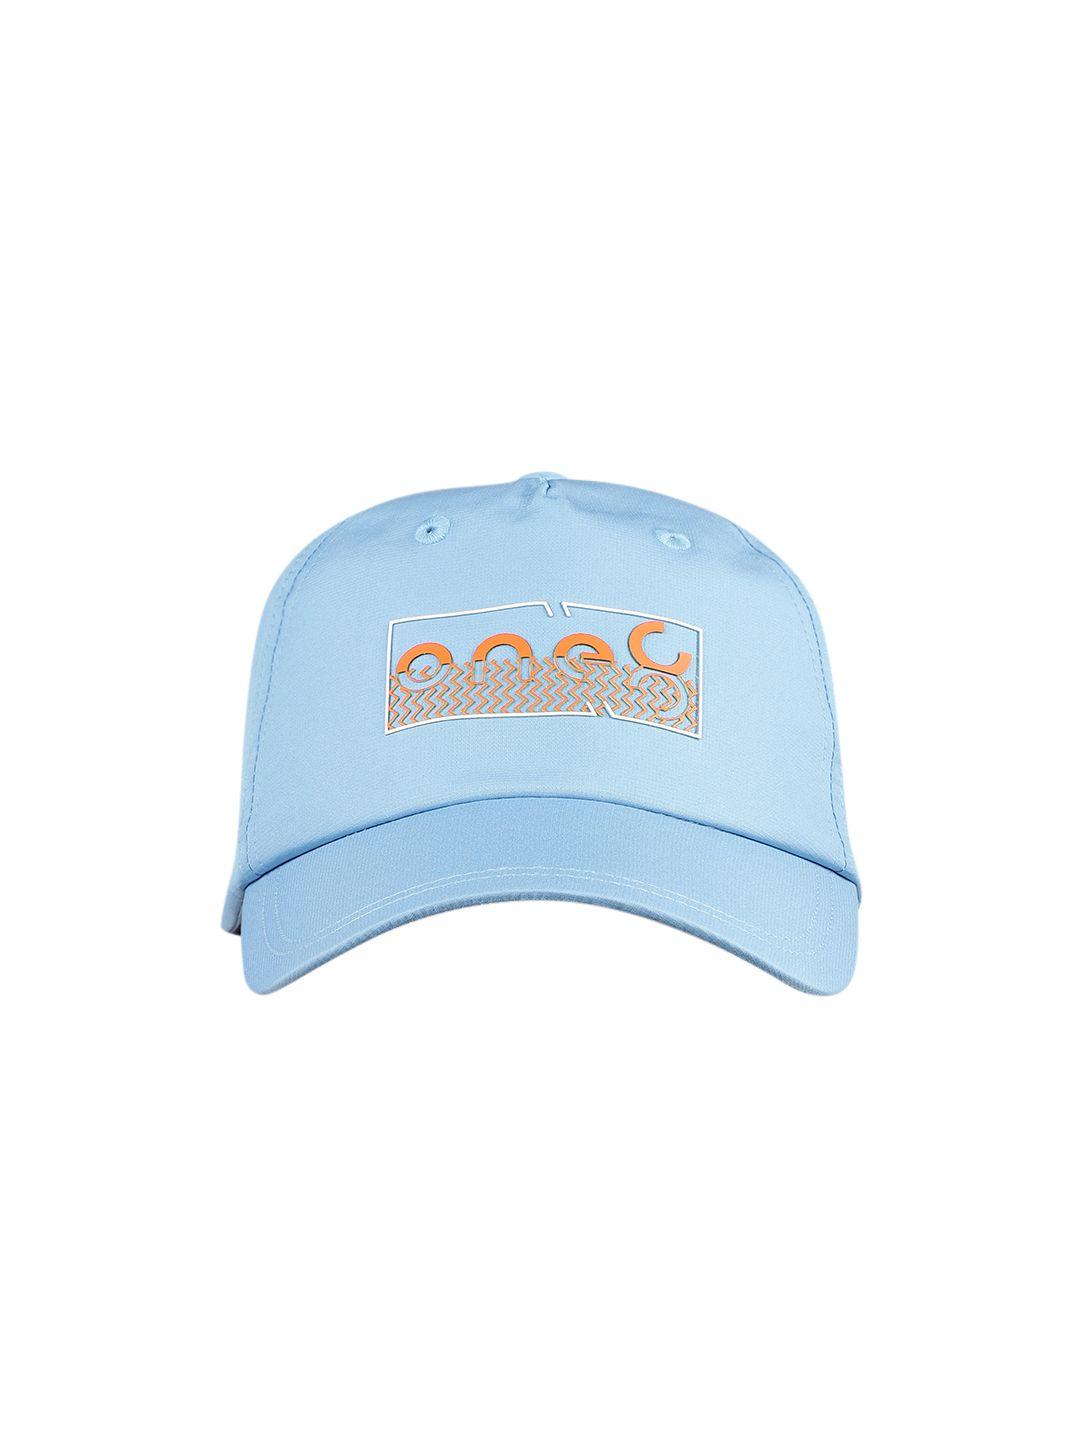 puma-x-one8-unisex-blue-printed-baseball-cap